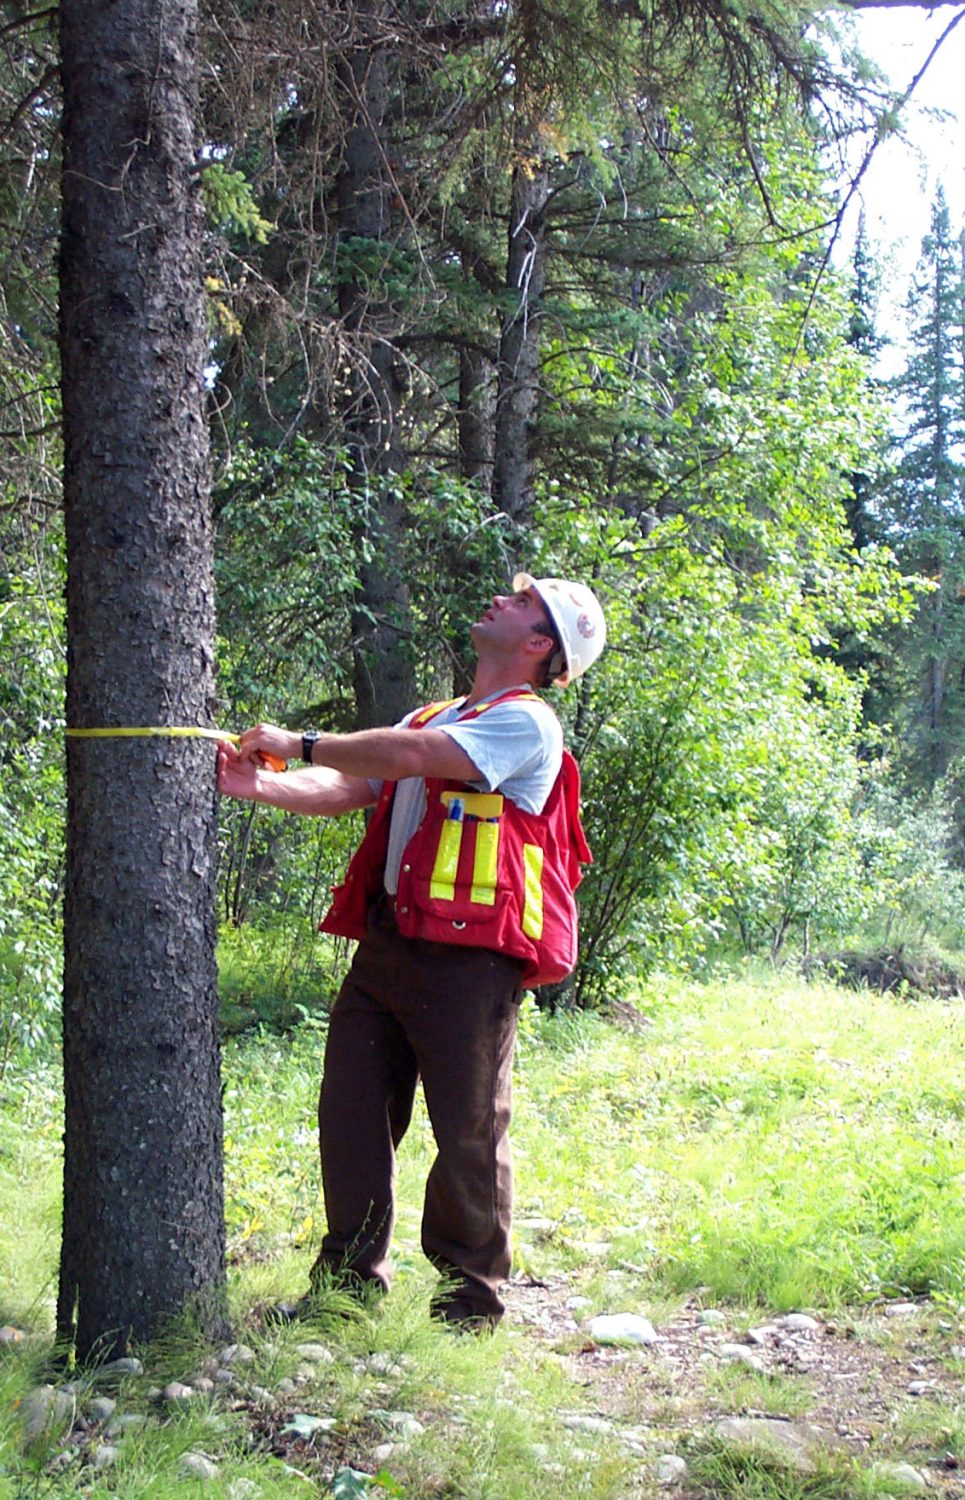 Measuring a tree's diameter